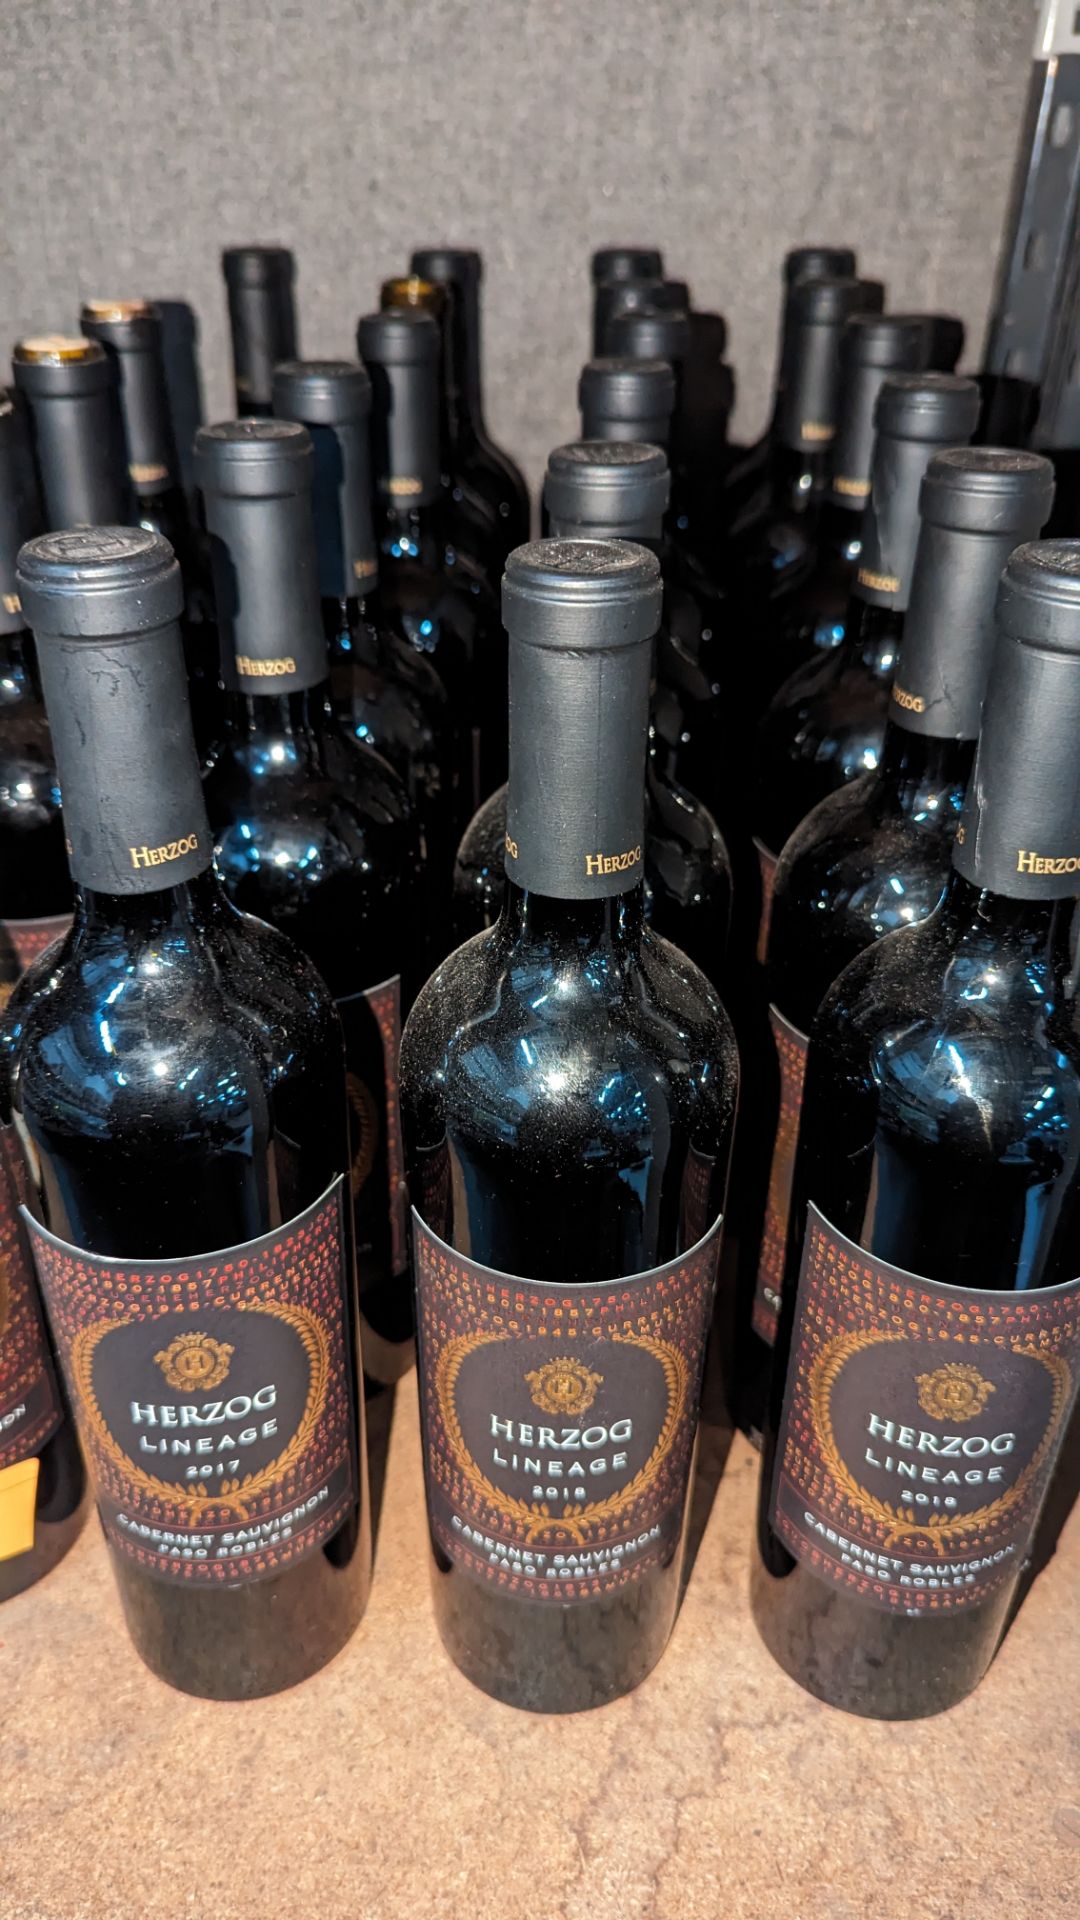 22 bottles of 2018 Herzog Lineage Cabernet Sauvignon Californian red wine & 1 bottle of 2017 Herzog - Image 4 of 6